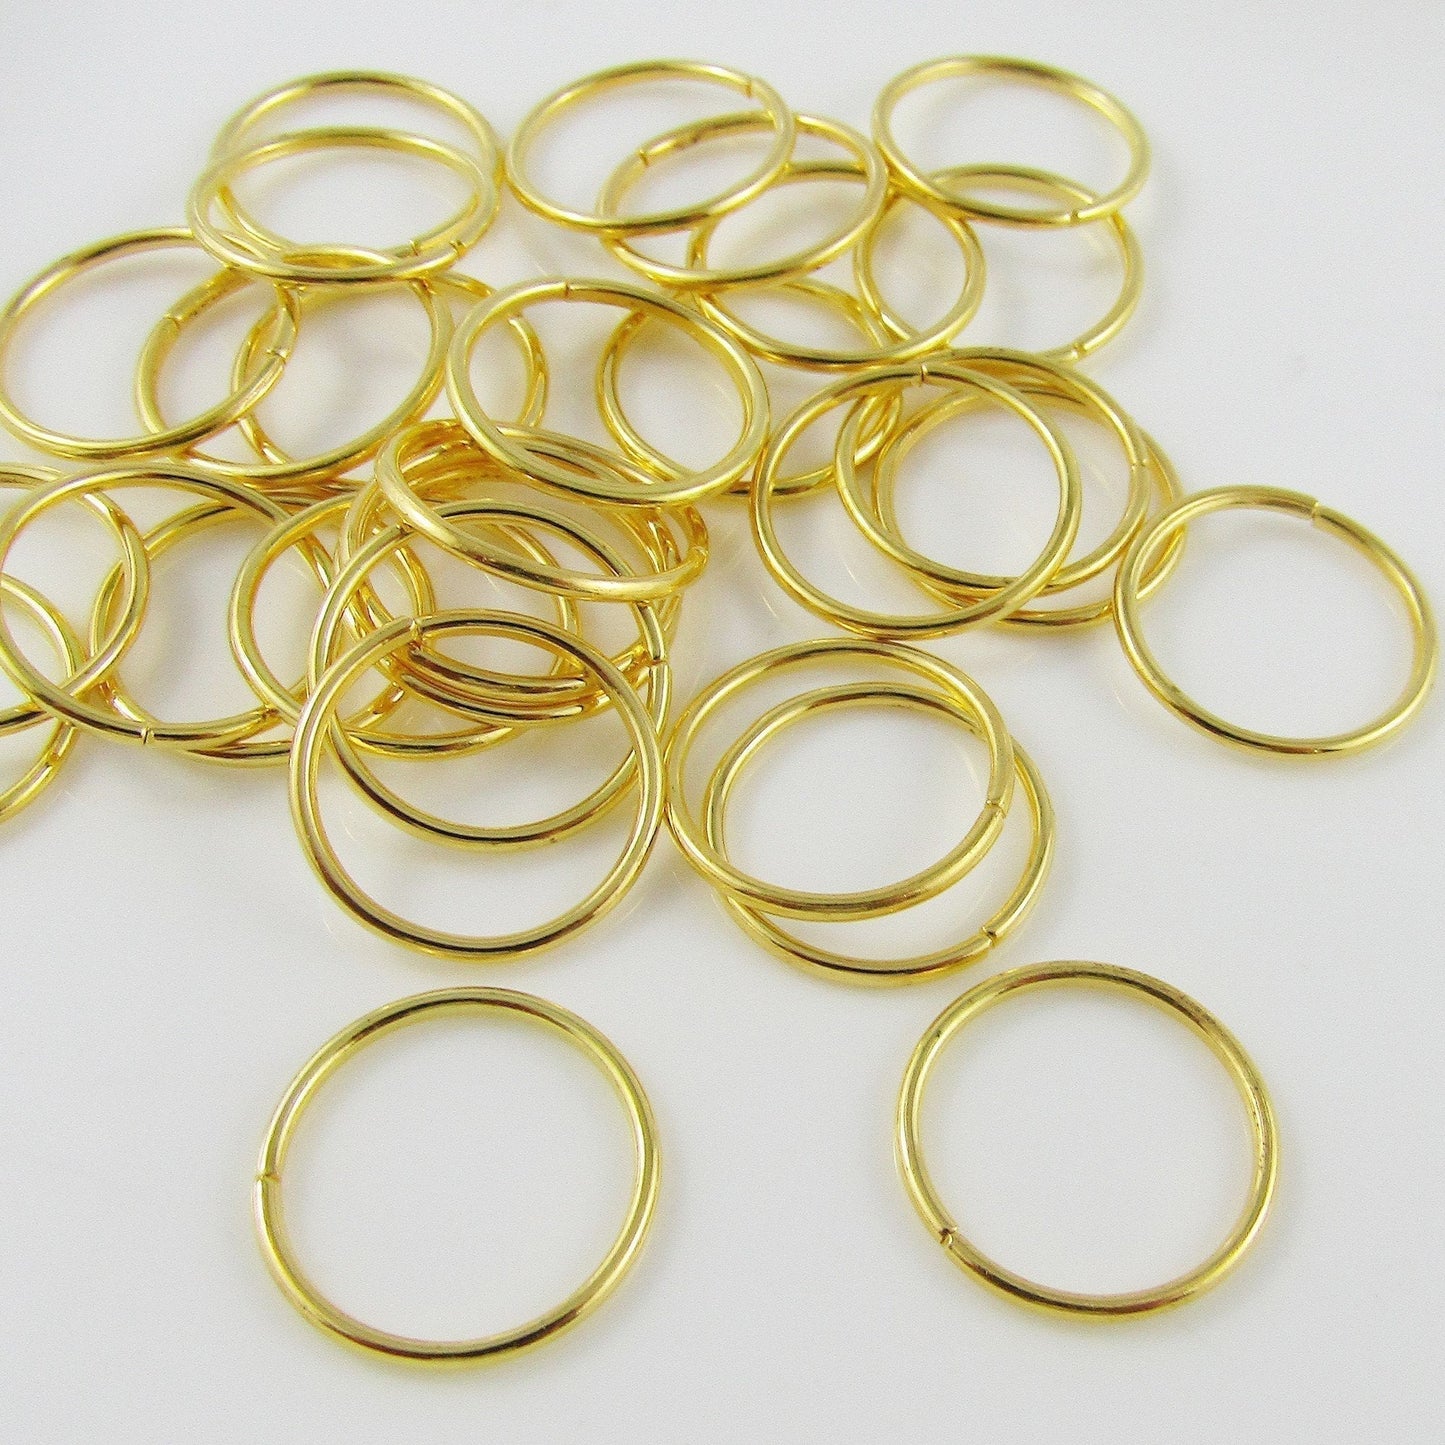 Bulk 45 pieces of 16x1.2mm Golden Jump Rings Open Jumprings Findings